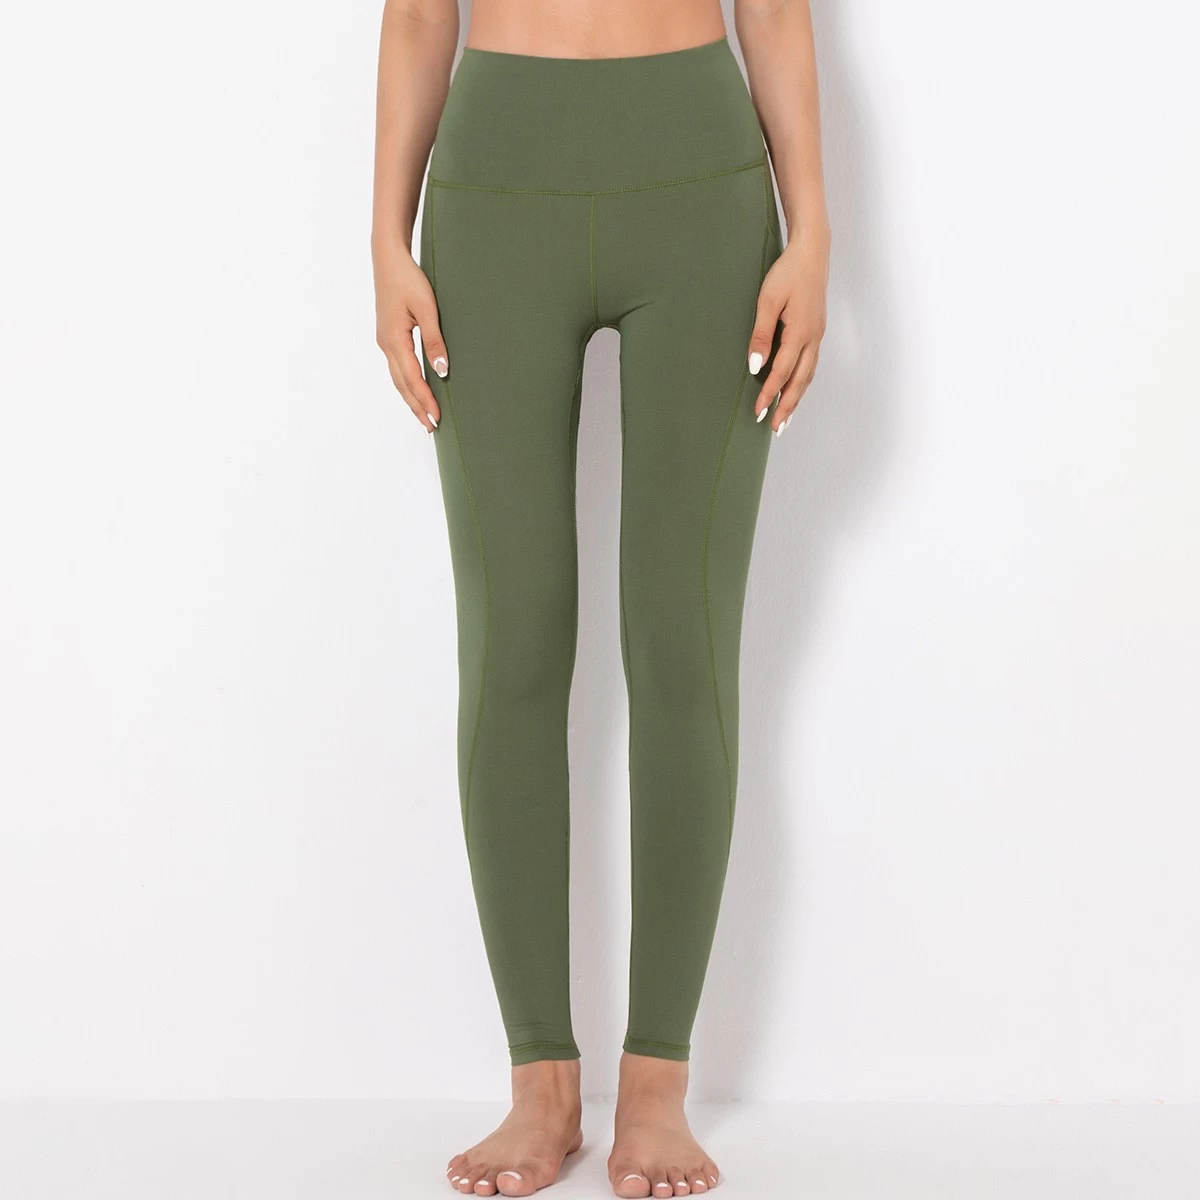 S-SHAPER Seamless Yoga Leggings for Women with Pockets High Waisted Tummy Control Women's Butt Lift Yoga Workout Leggings Running Pants